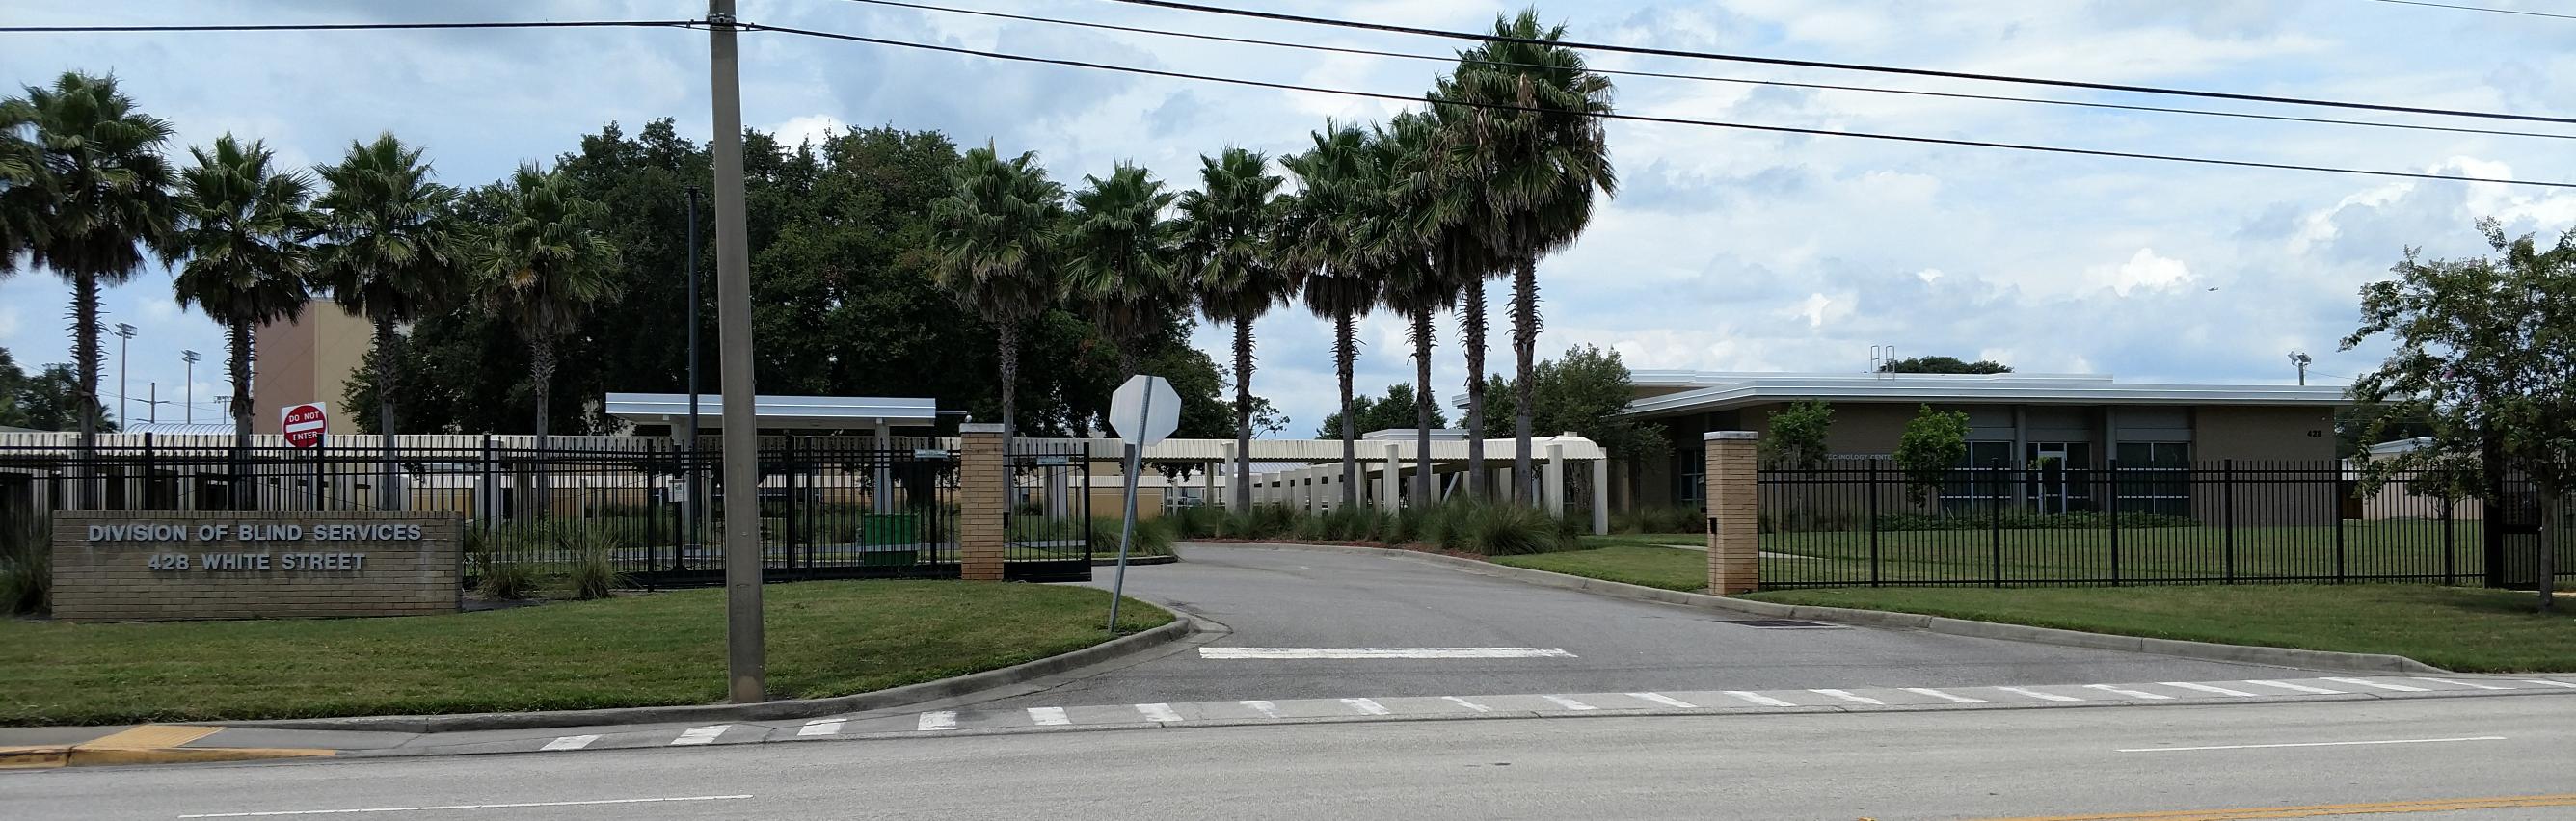 White street view of rehab center